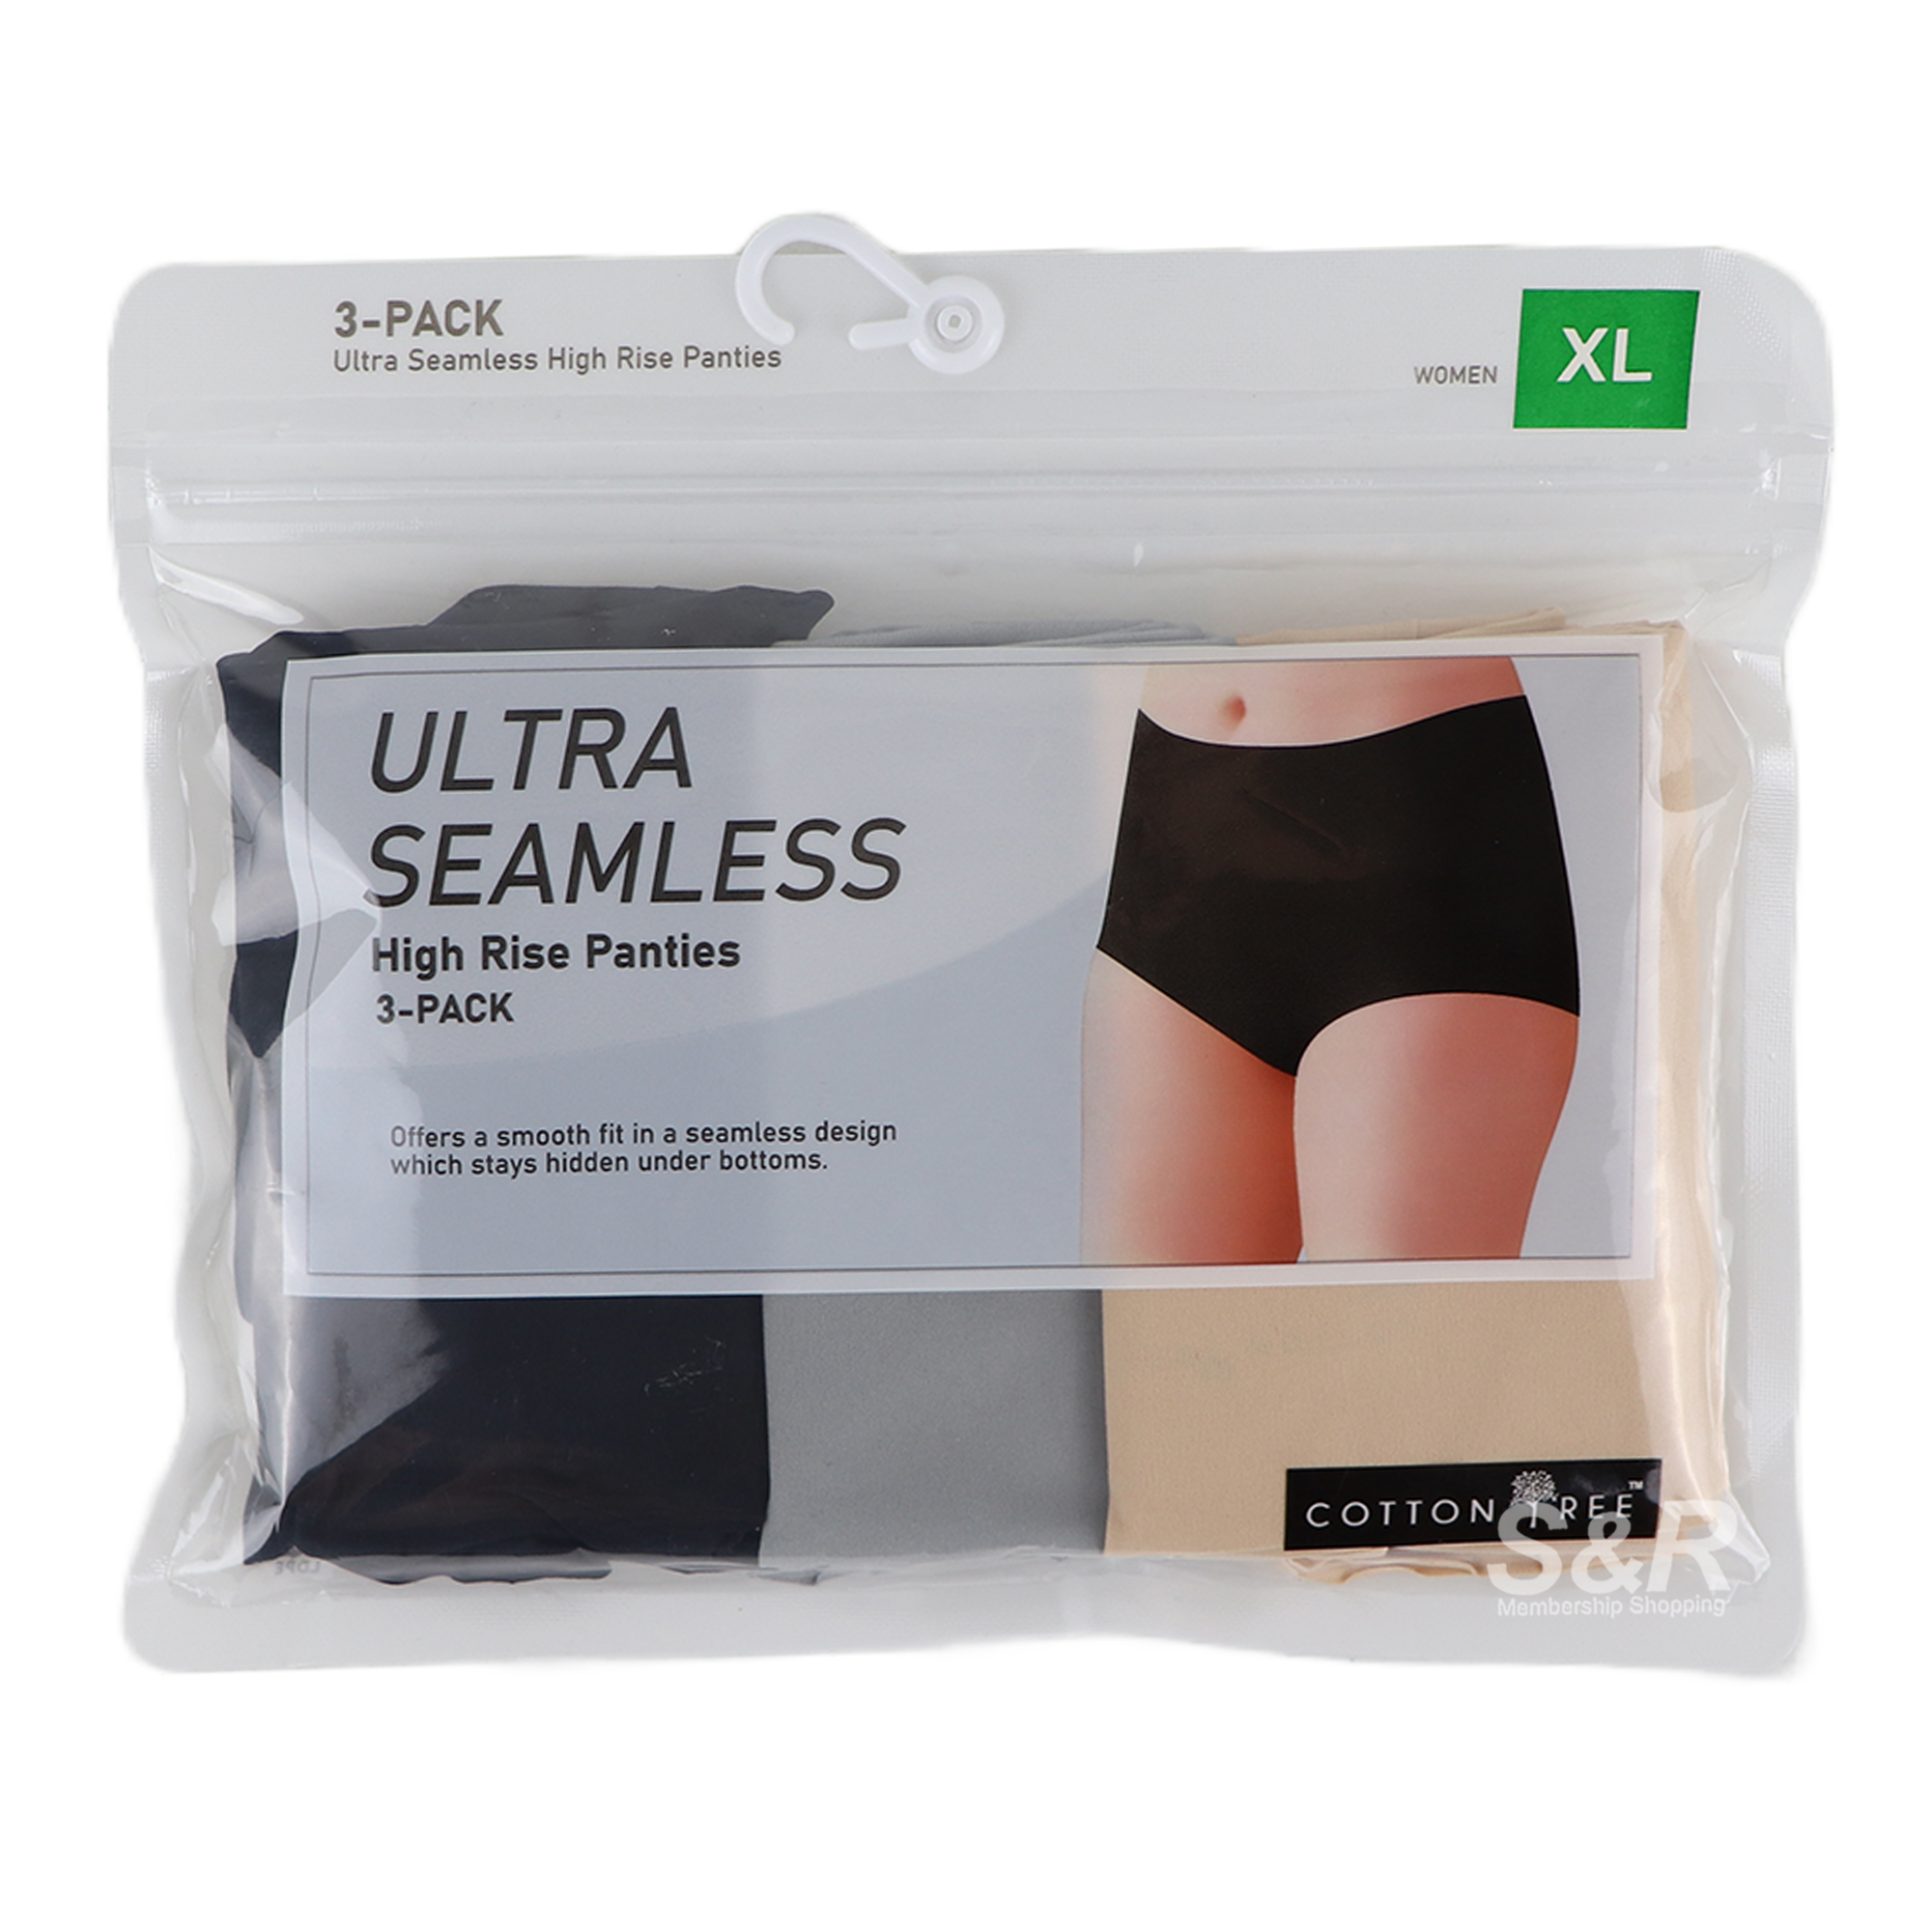 Cotton Tree Ultra Seamless High Rise Panties XL 3-Pack